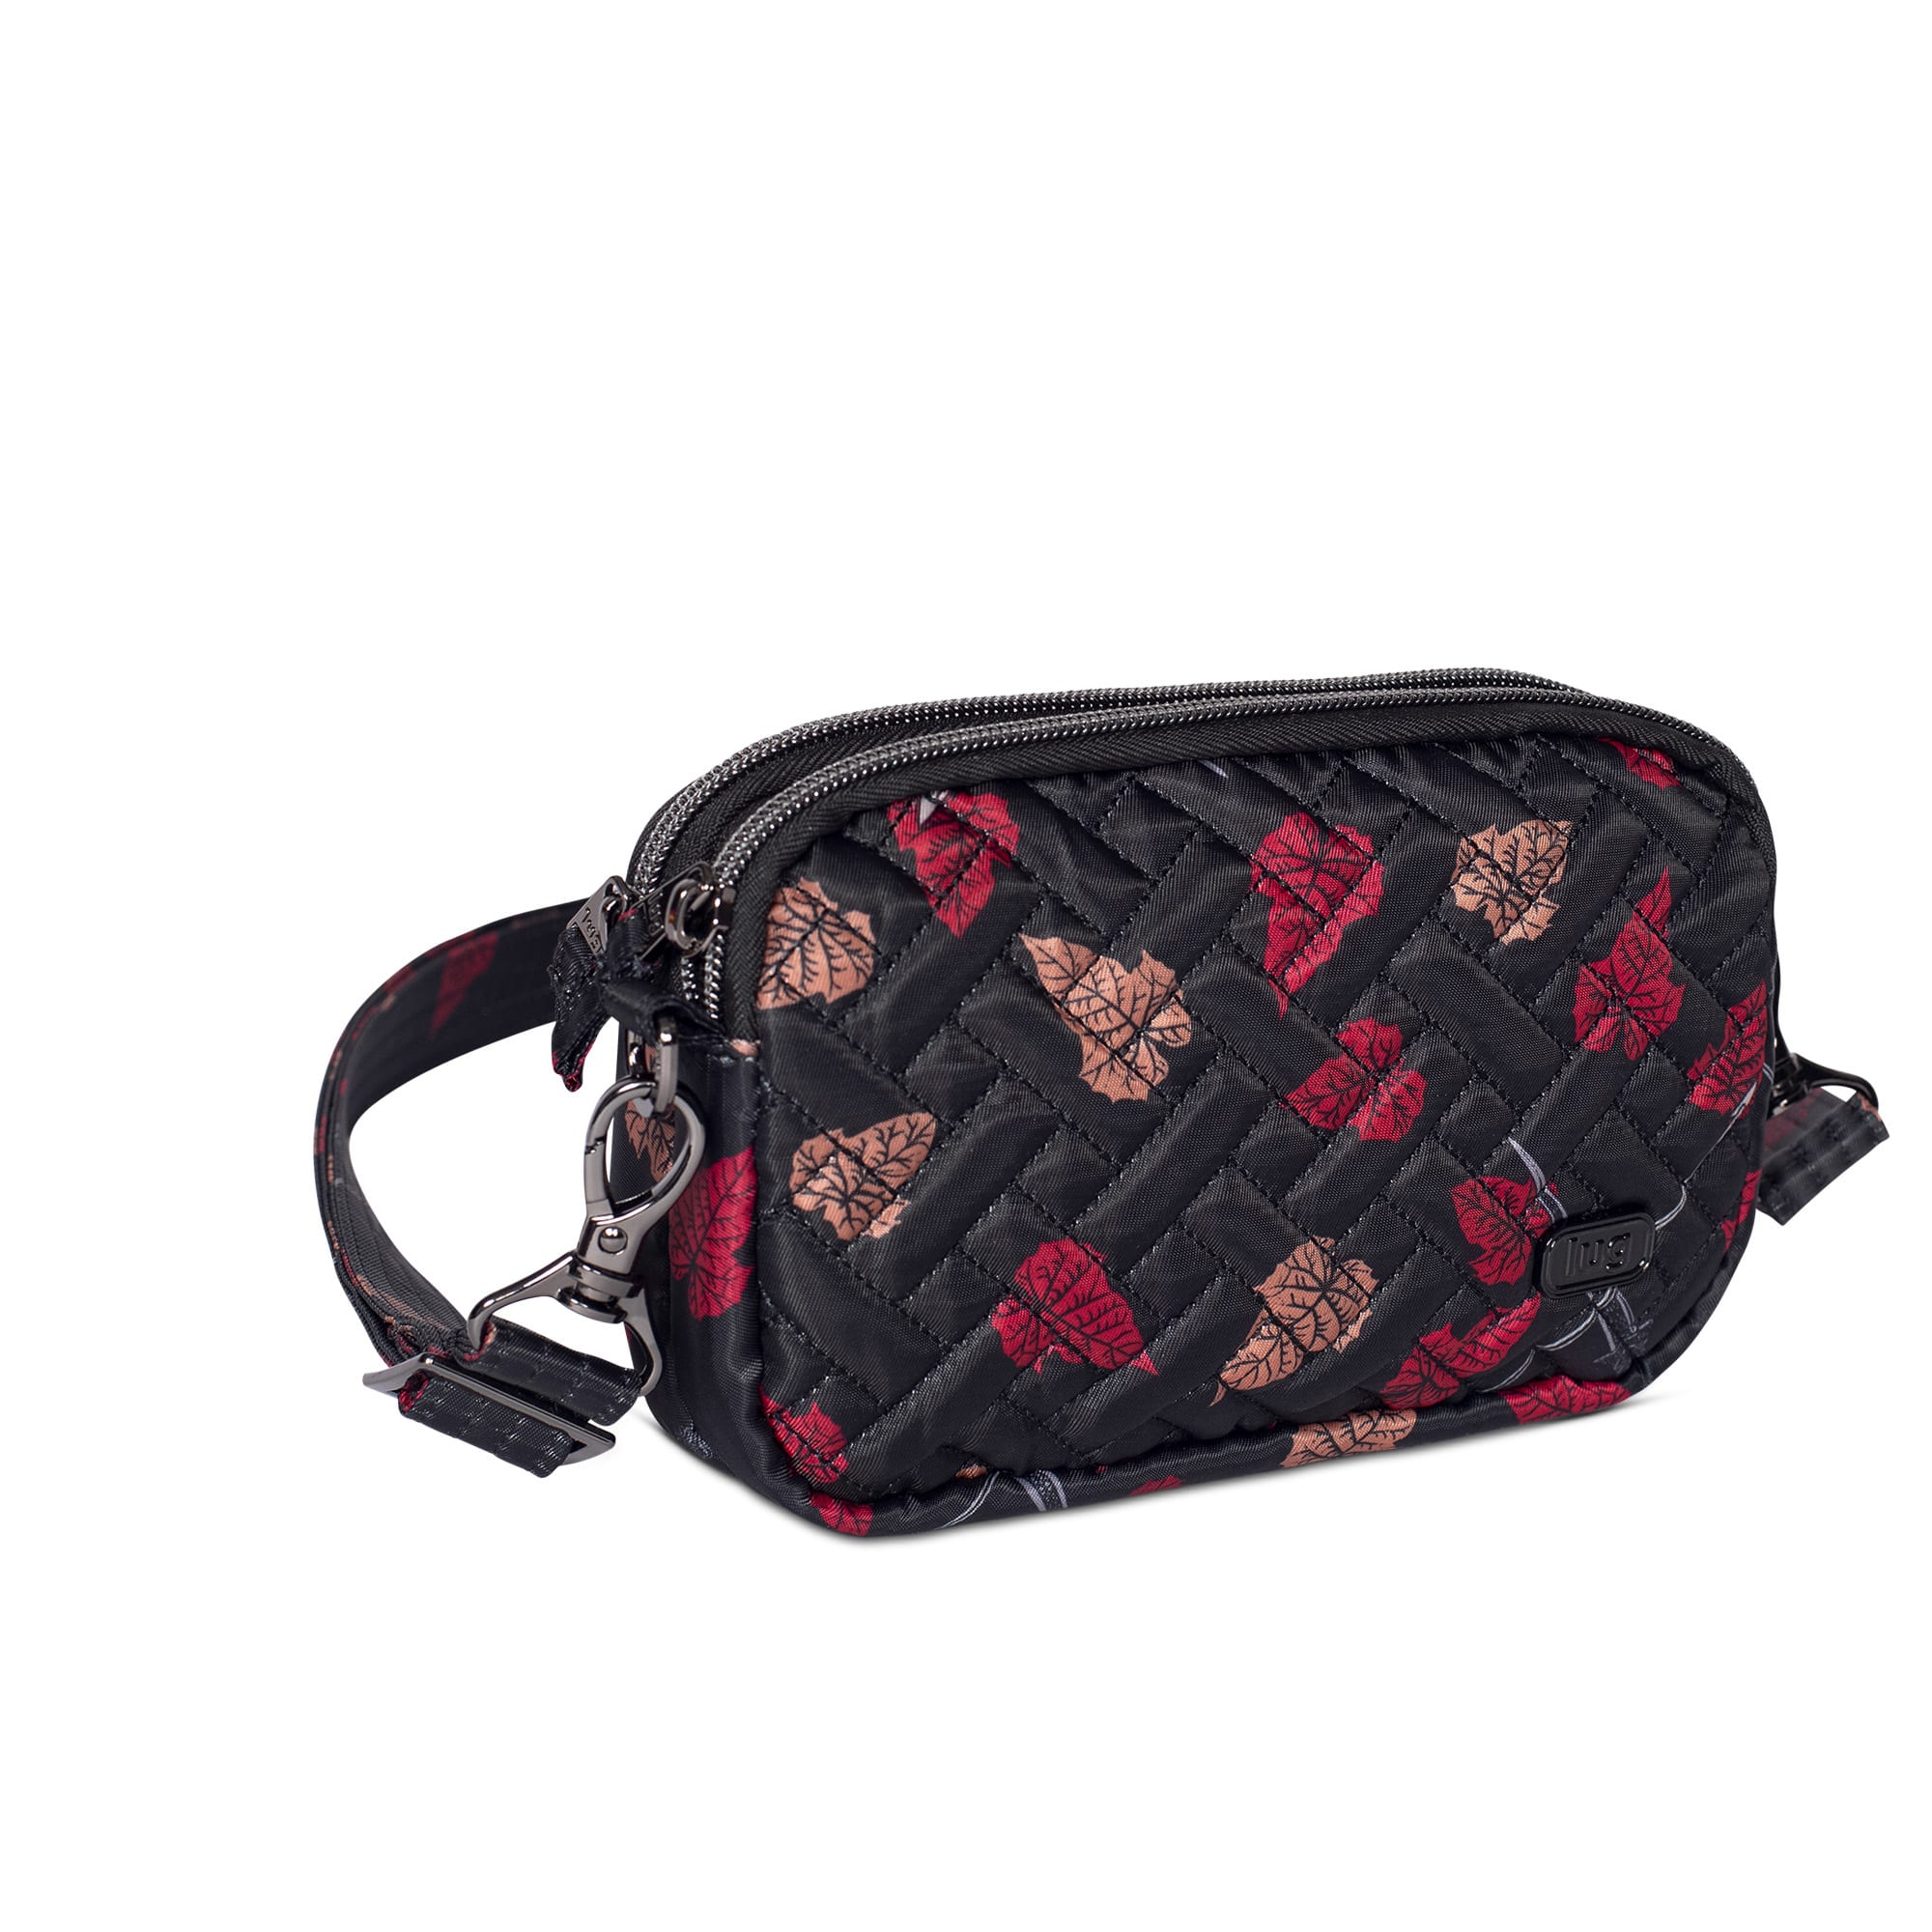 Download Image Pink Louis Vuitton Handbag with Teal Leather Trim Wallpaper